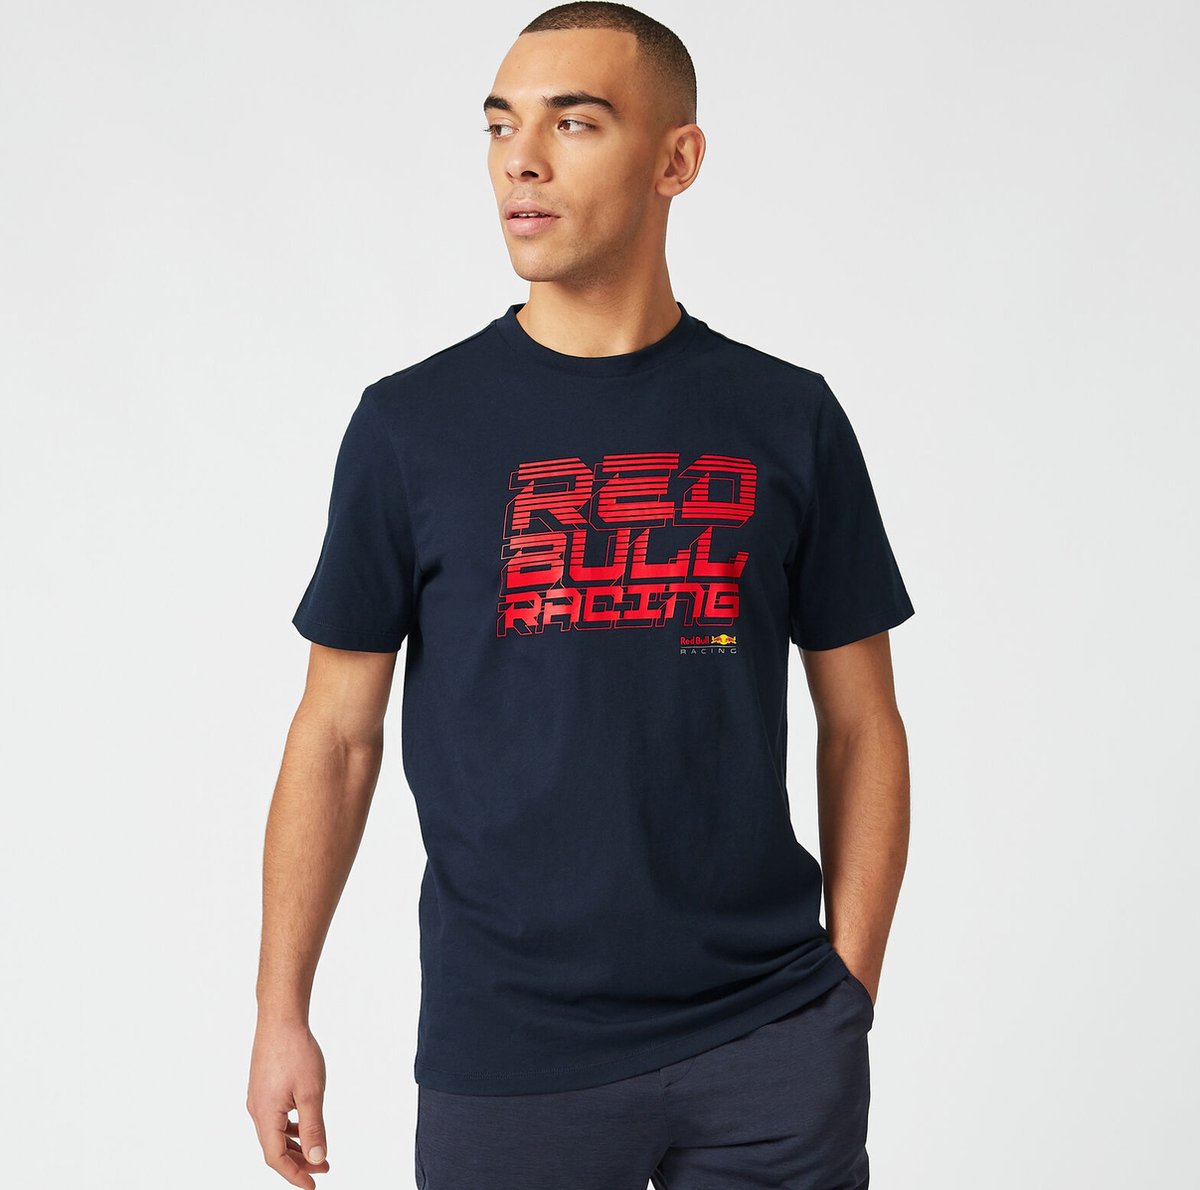 Red Bull Racing Team Graphic tee XL -Max Verstappen t-shirt - Formule 1 - F1 2022